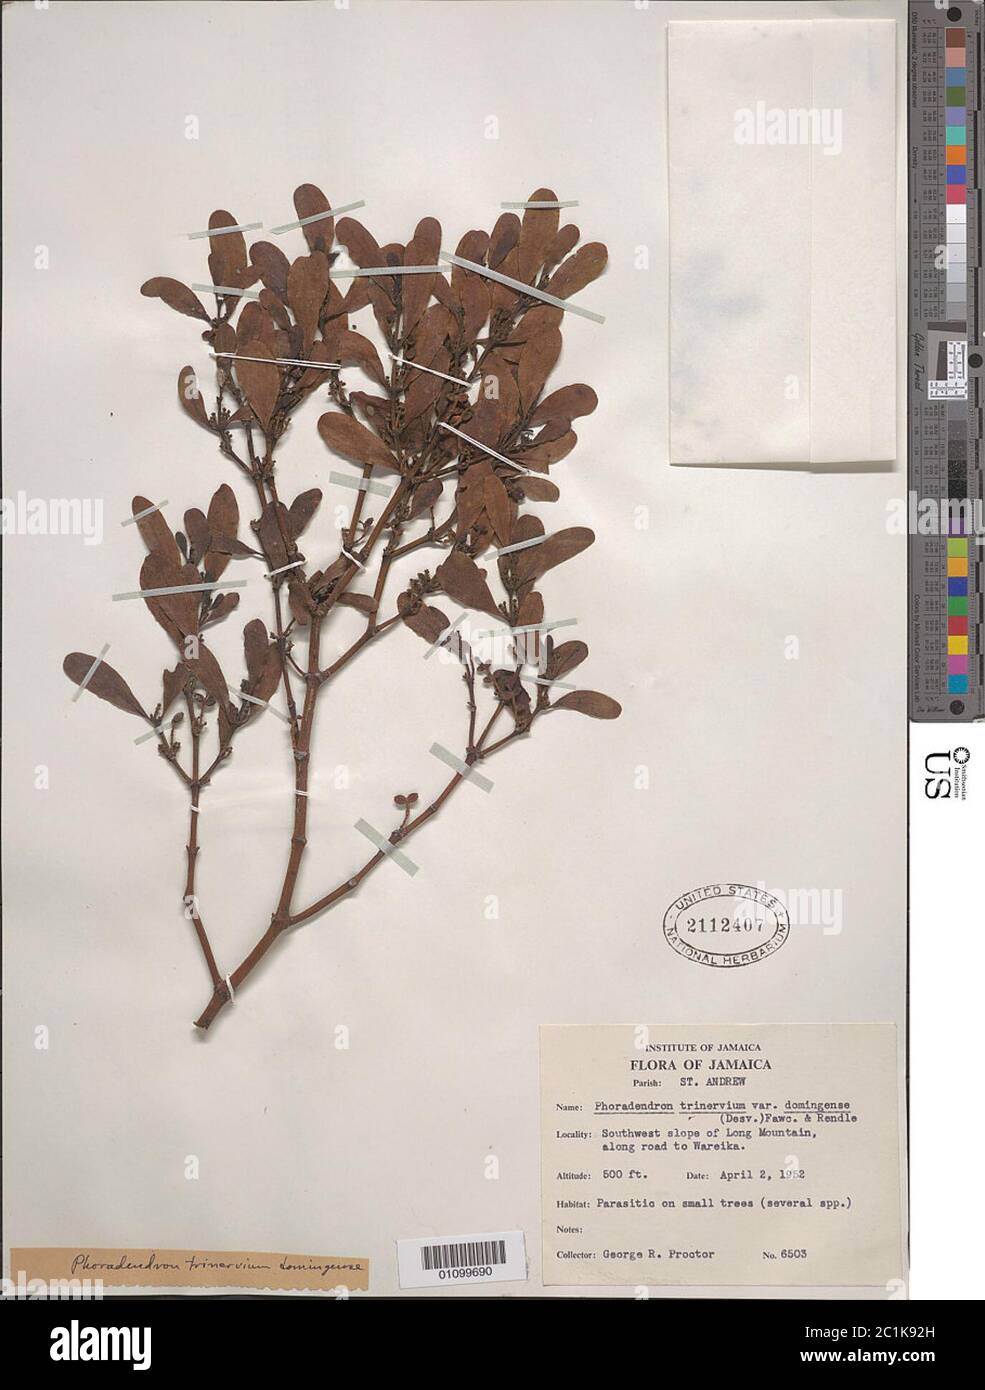 Phoradendron trinervium var domingense Ham Krug Urb Phoradendron trinervium var domingense Ham Krug Urb. Stock Photo